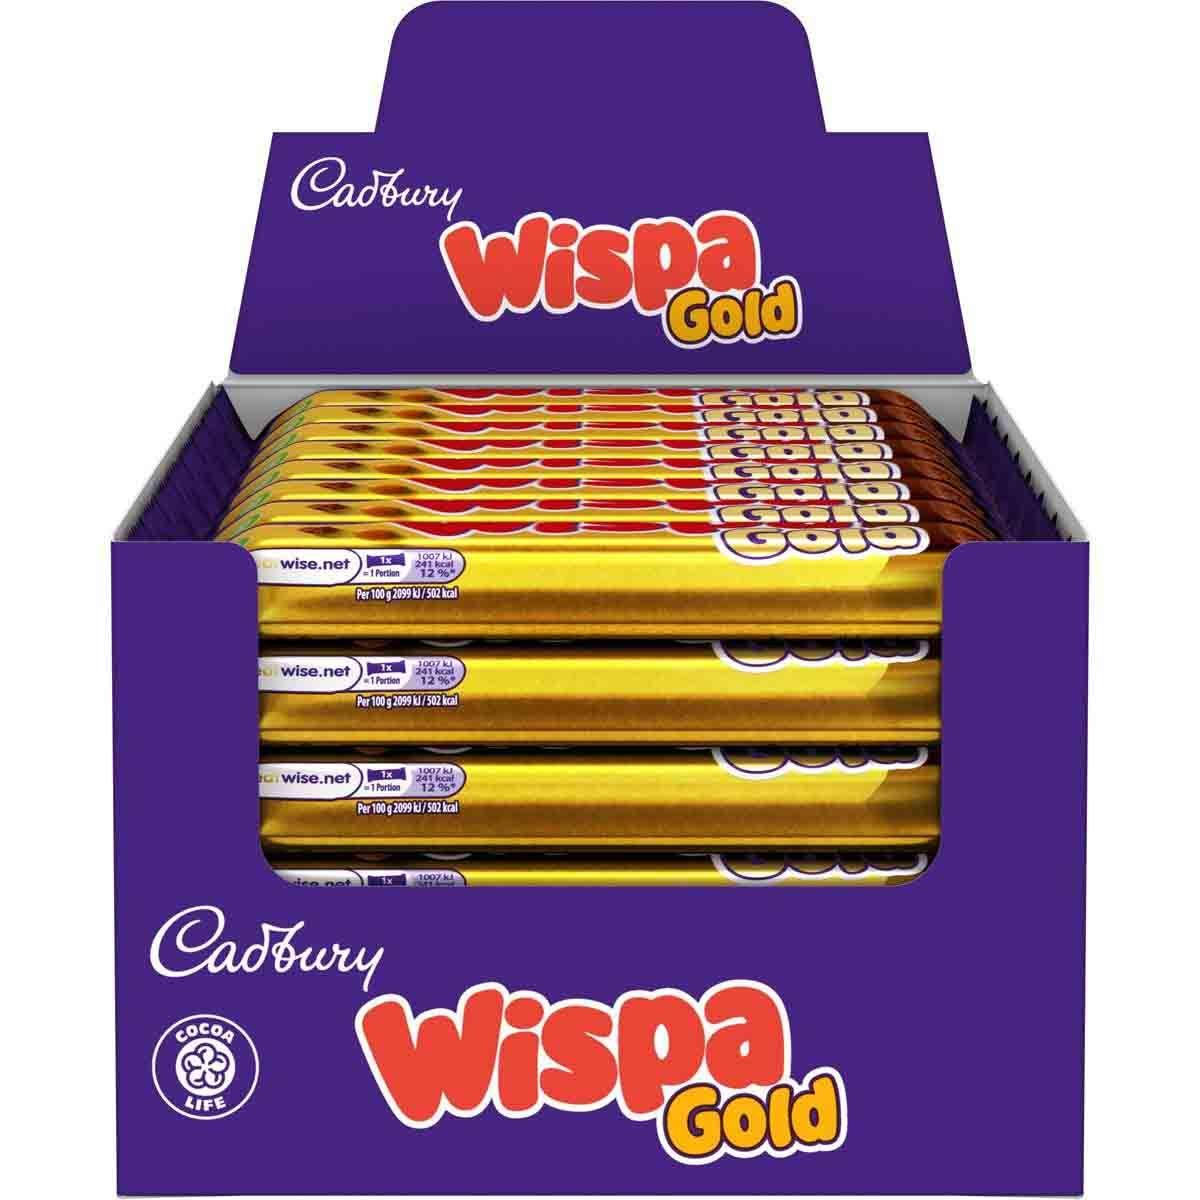 Cadbury Wispa Gold Caramel & Chocolate Bars - Box of 48 - Vending Superstore